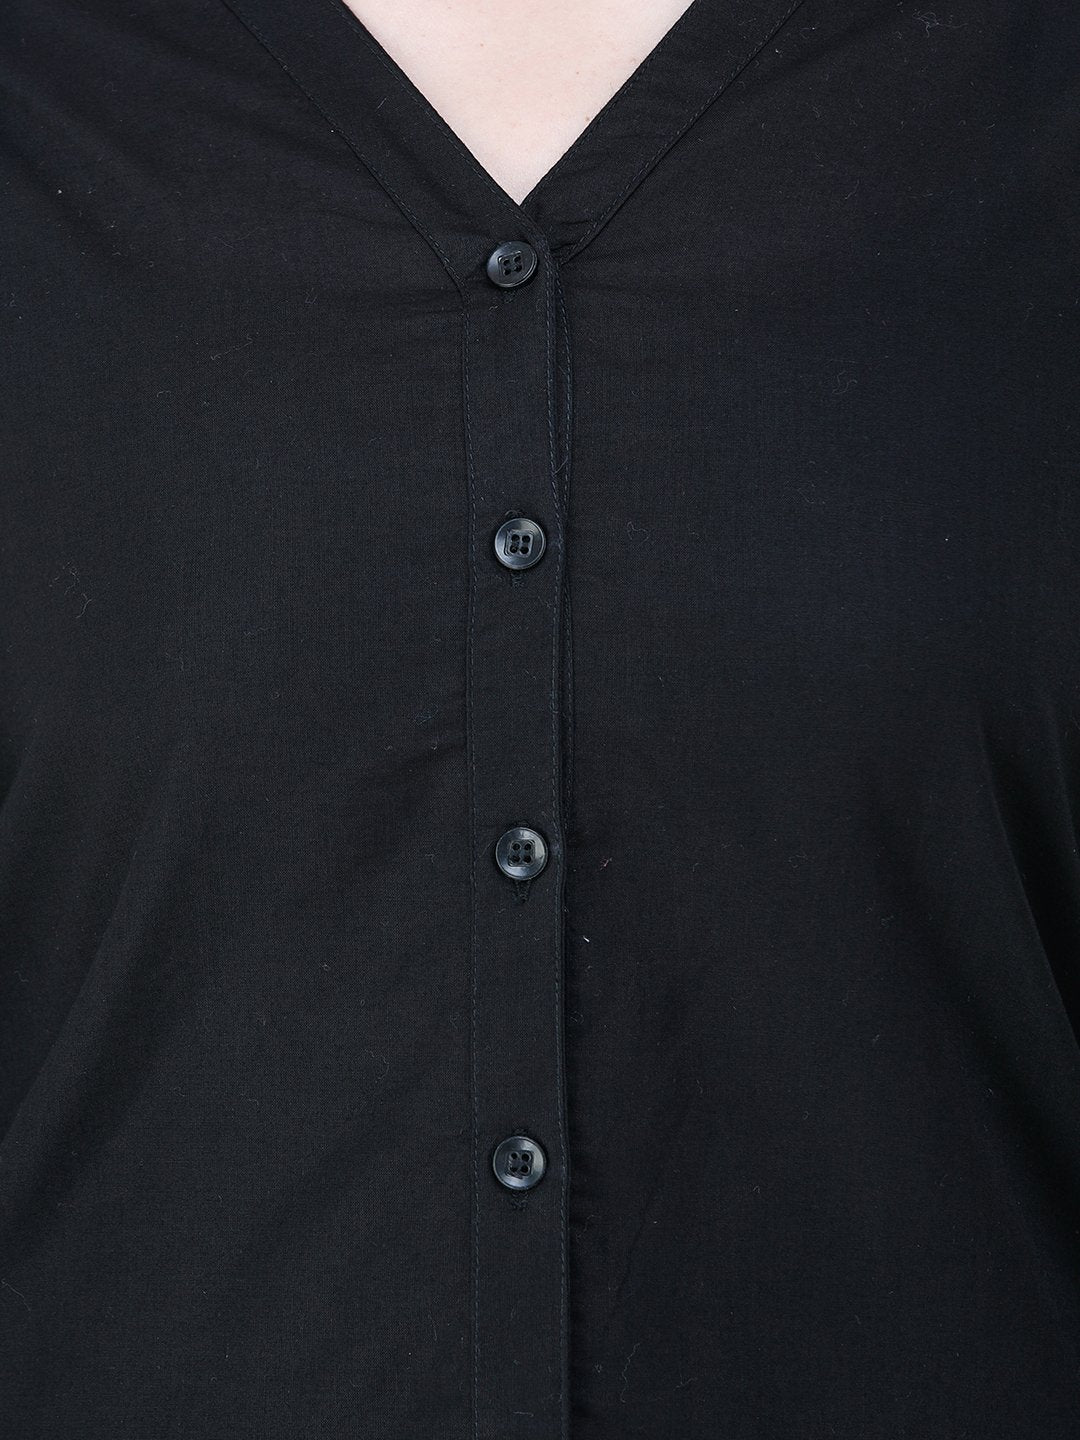 SCORPIUS Black V neck shirt